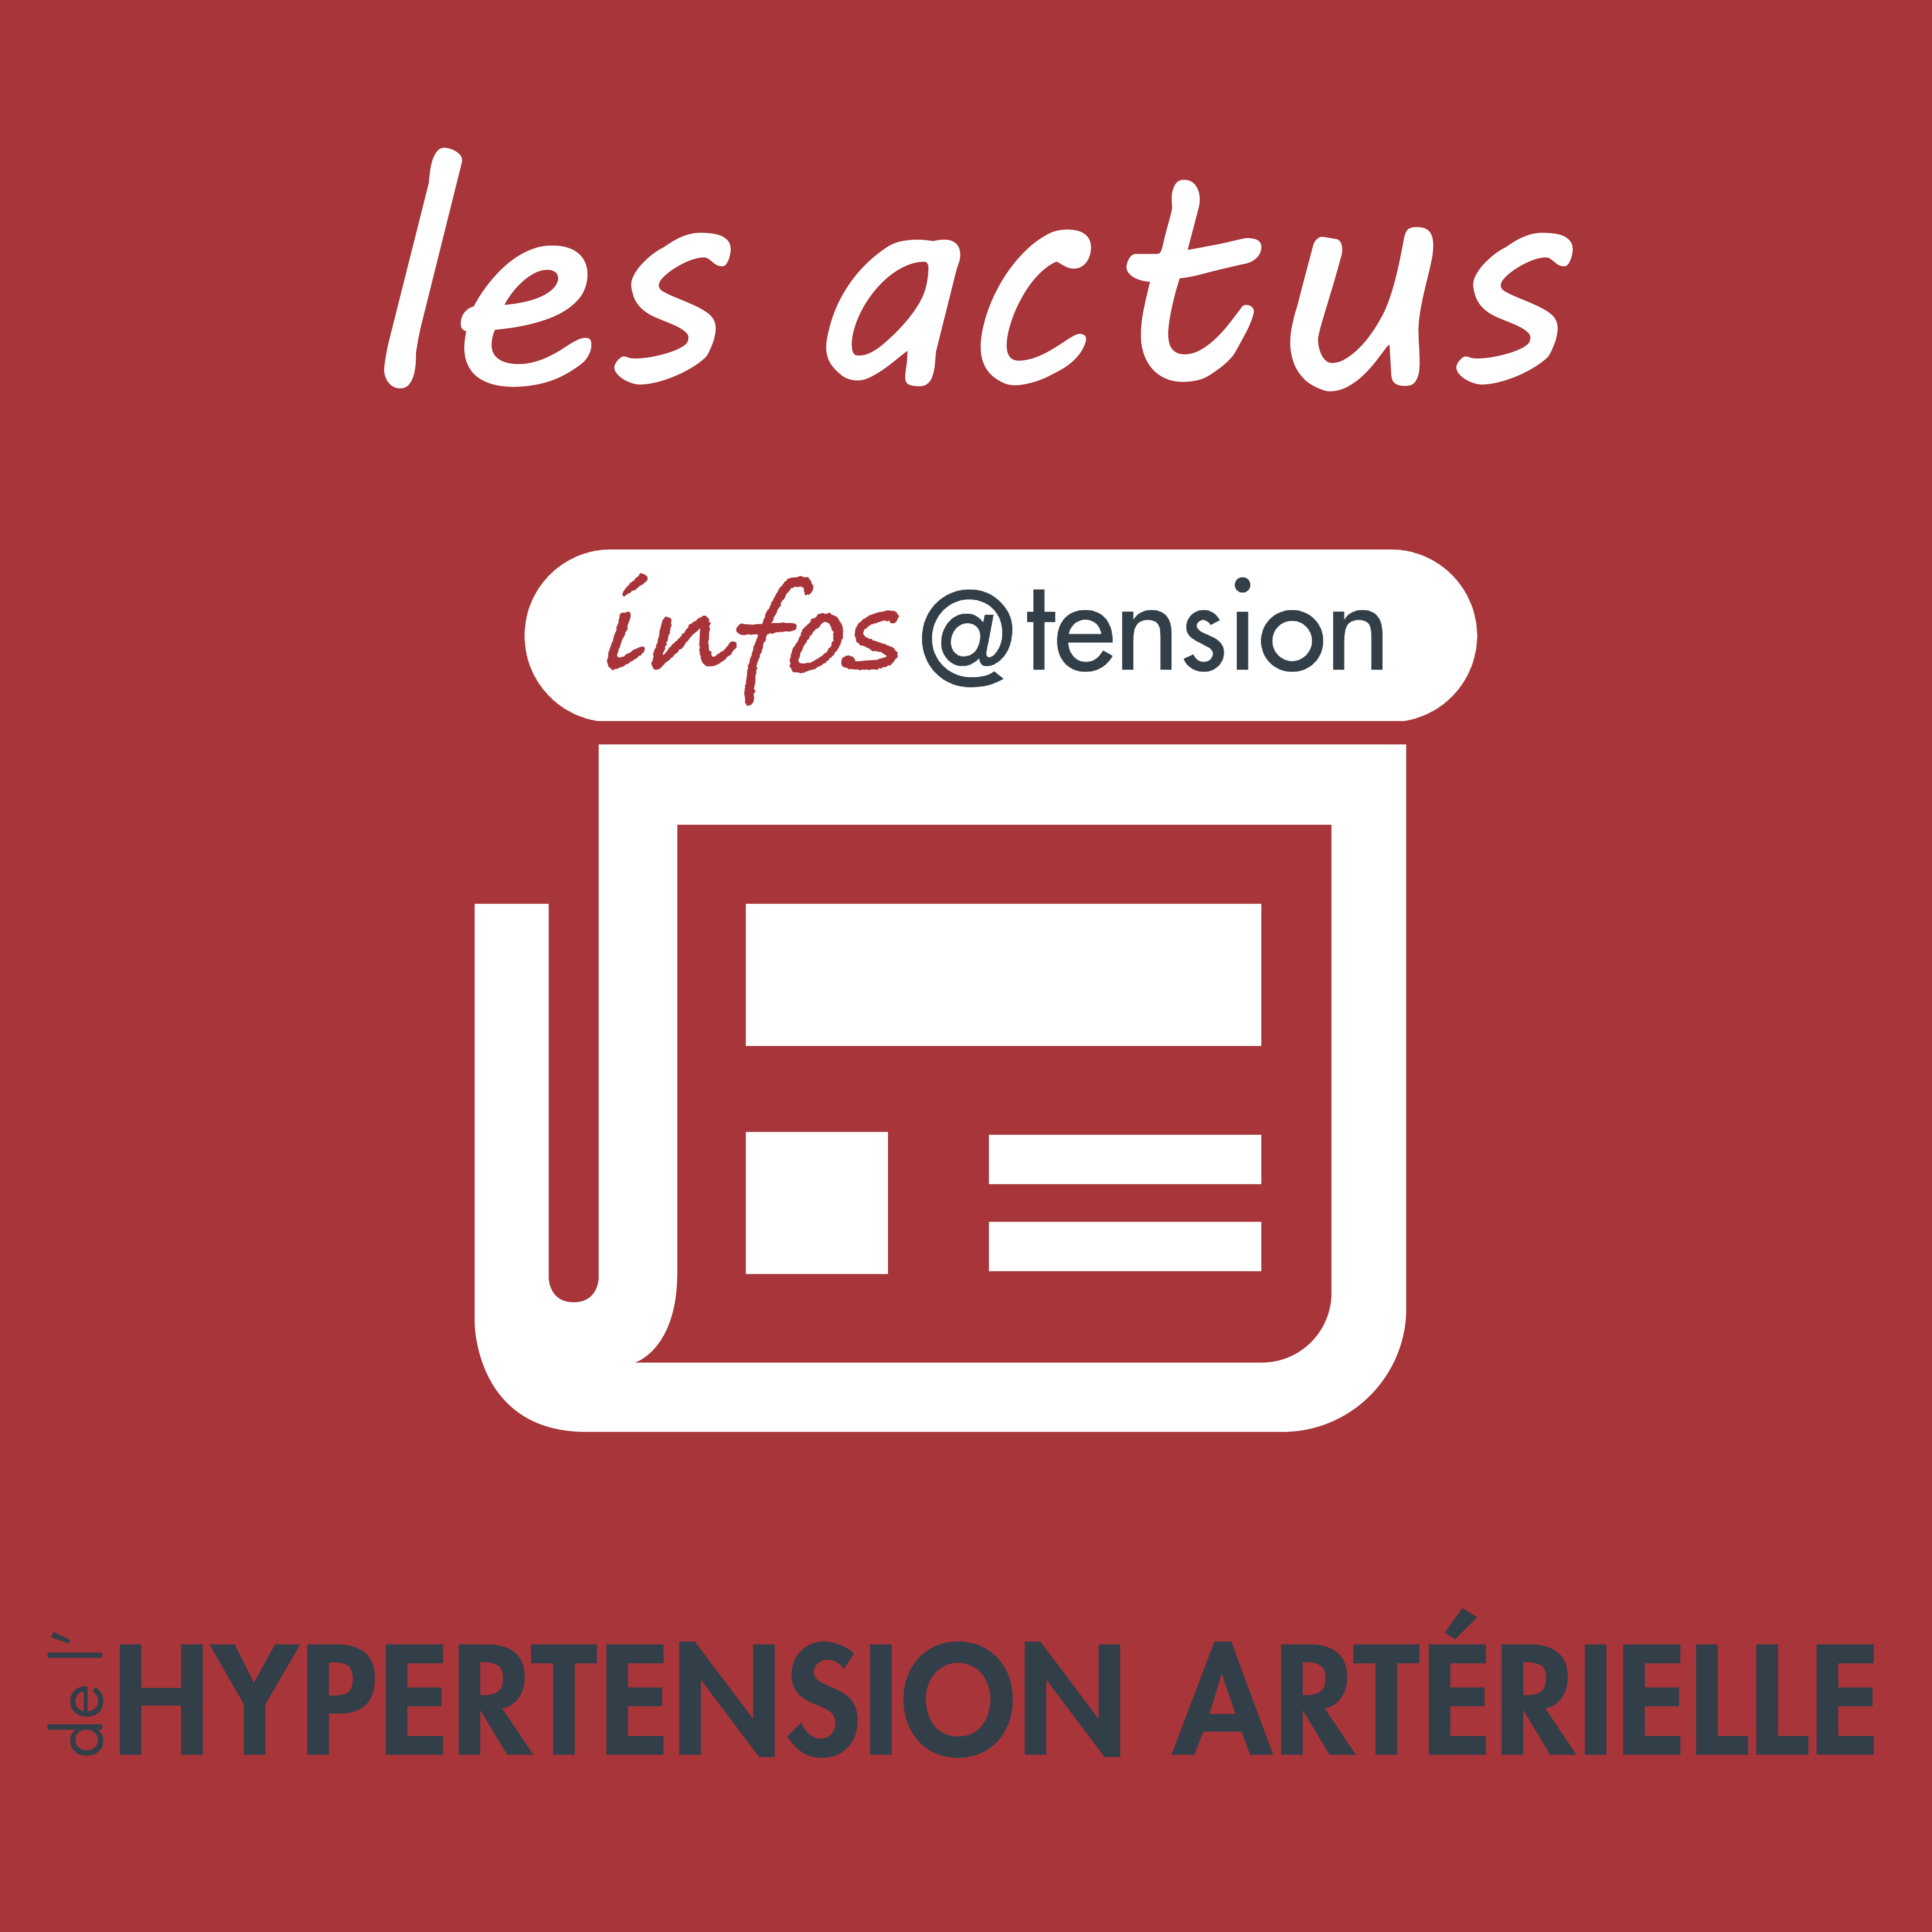 Hypertension France,Hypertension artérielle,Vidéos,vidéo hypertension,Pr Xavier Girerd,Fondation Hypertension